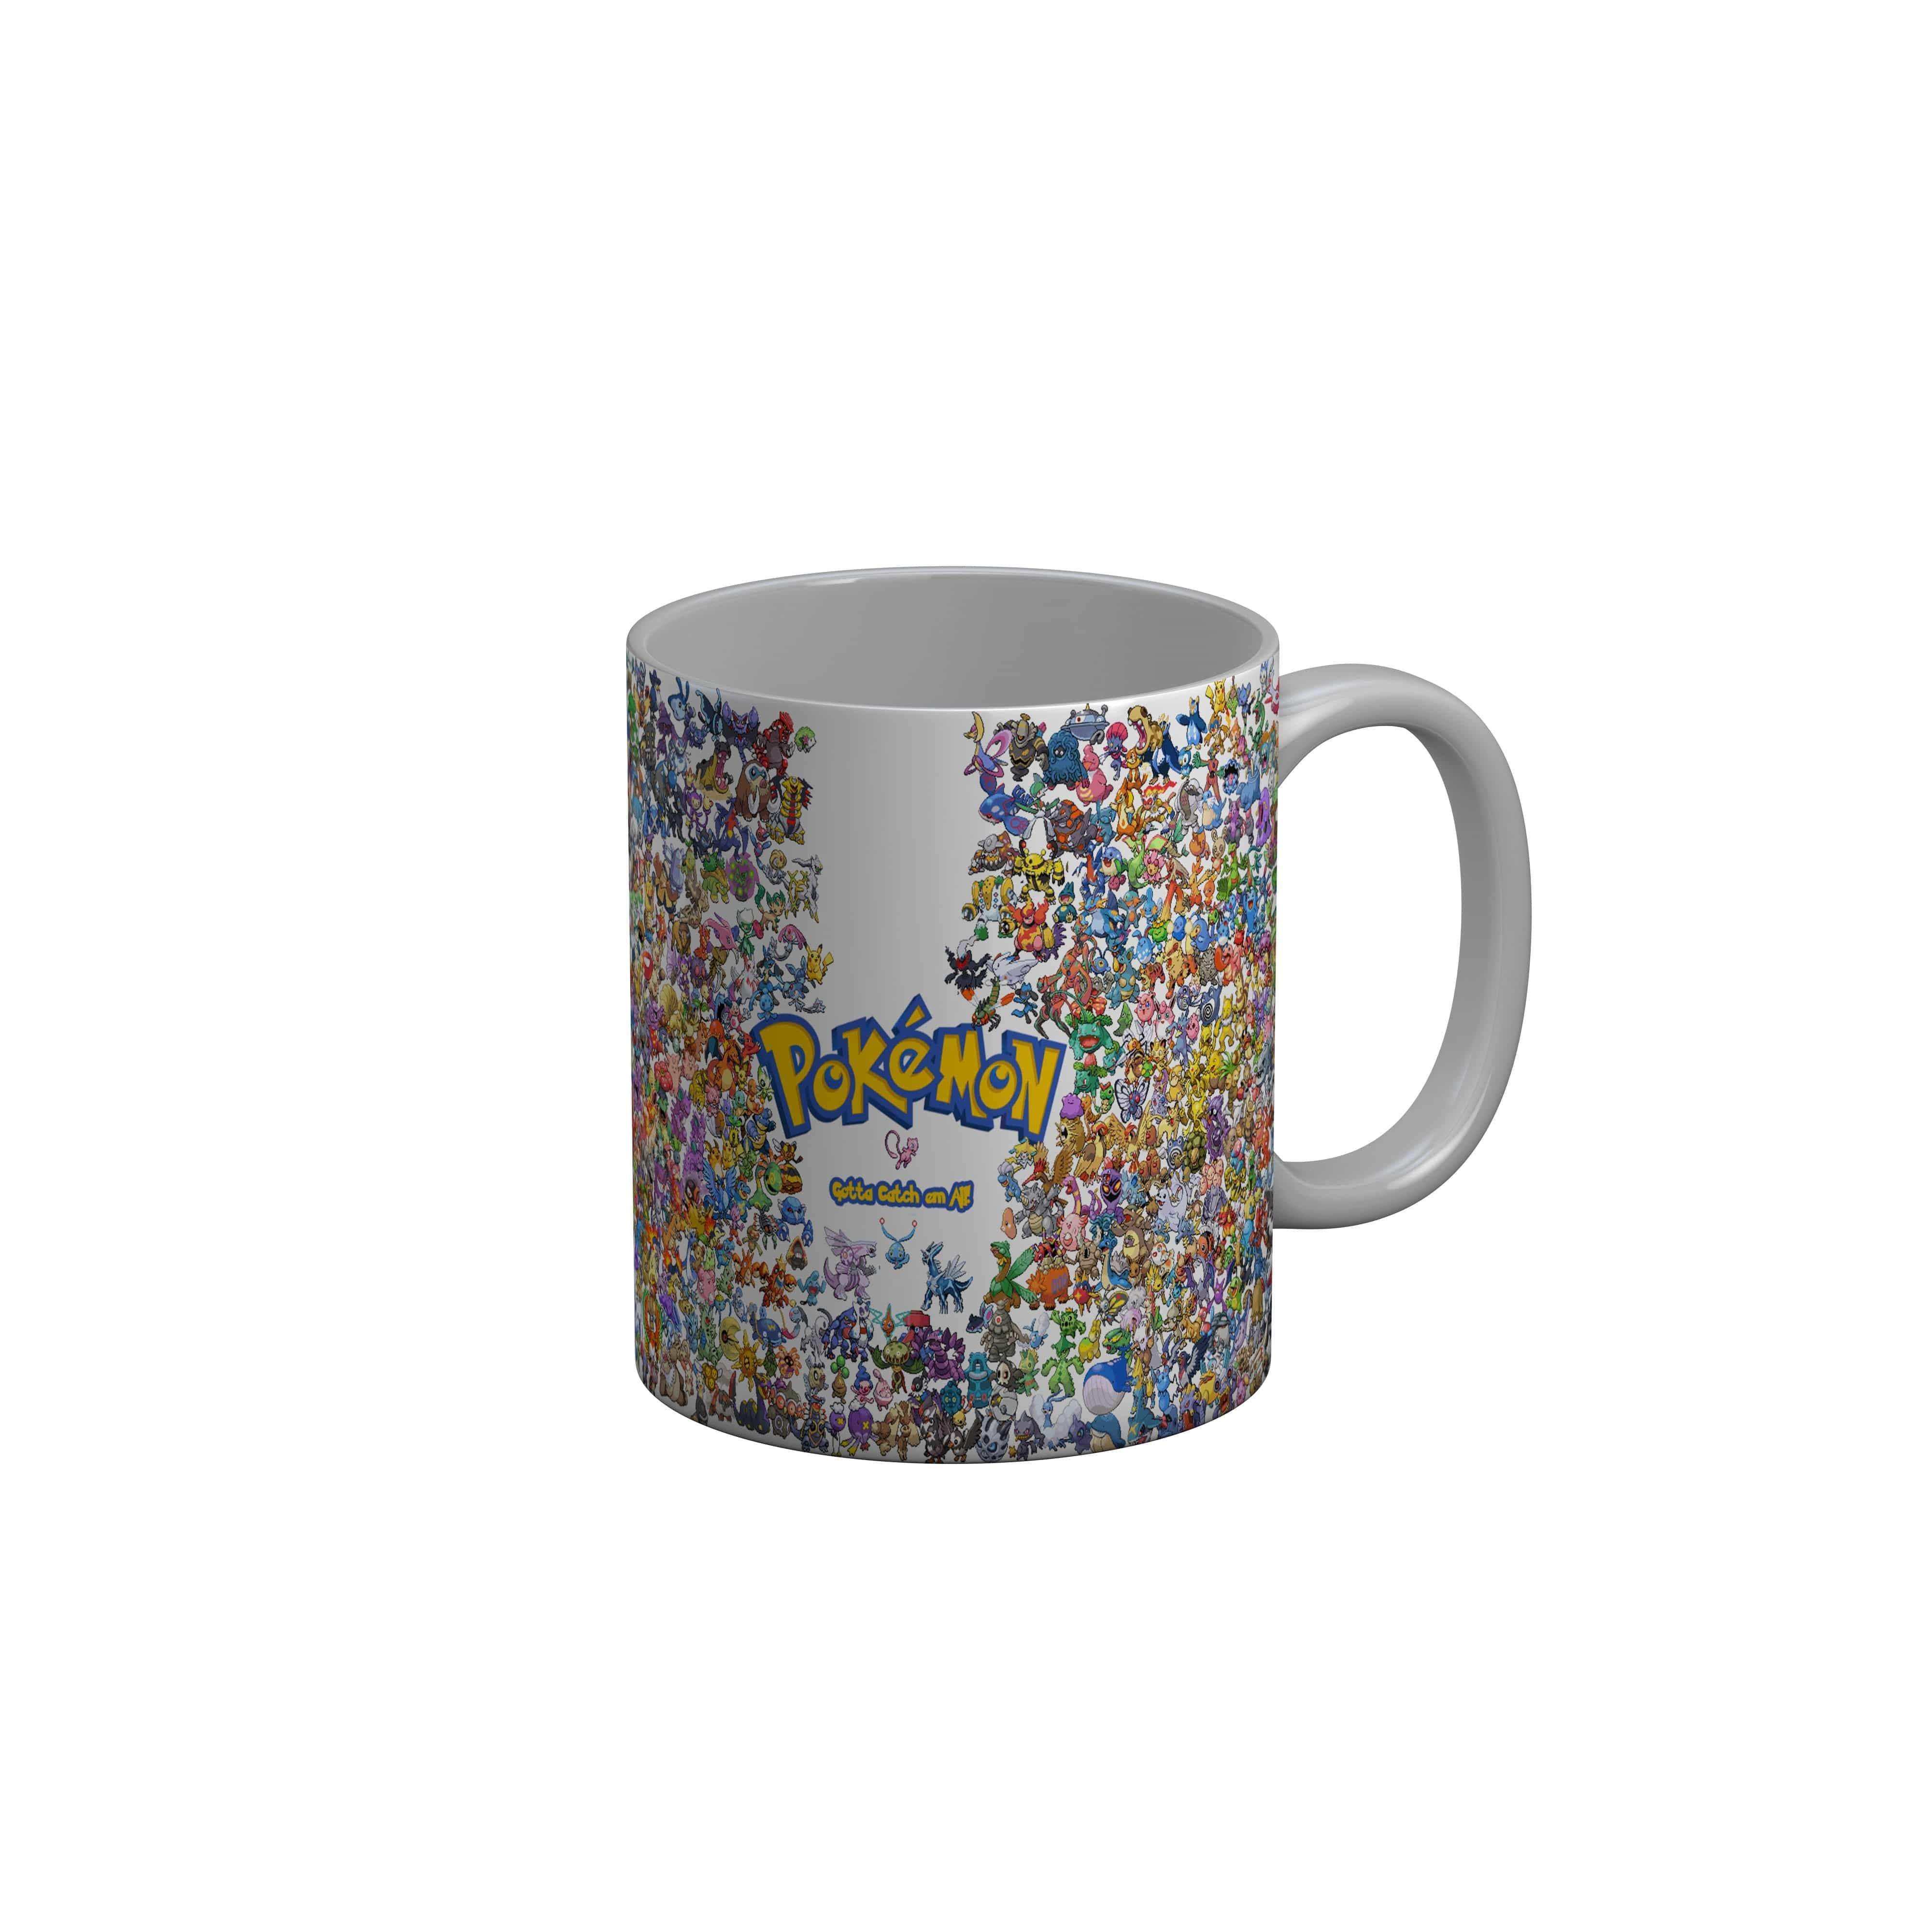 FashionRazor Attractive Cute Pokaemon Ceramic Coffee Mug Mug FashionRazor